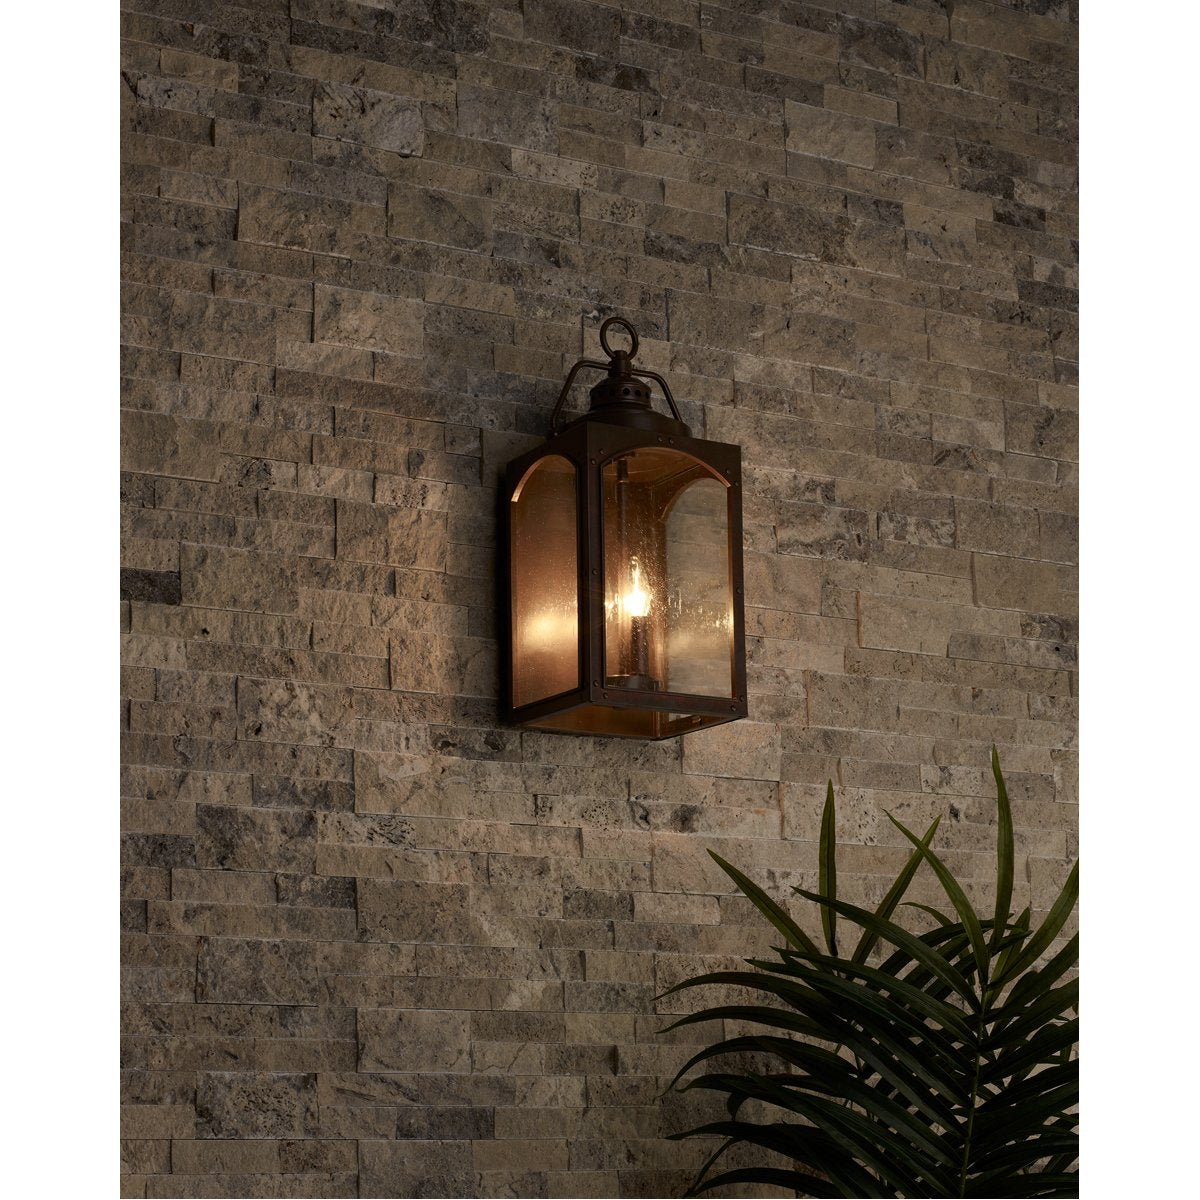 Feiss Randhurst 3-Light Wall Lantern